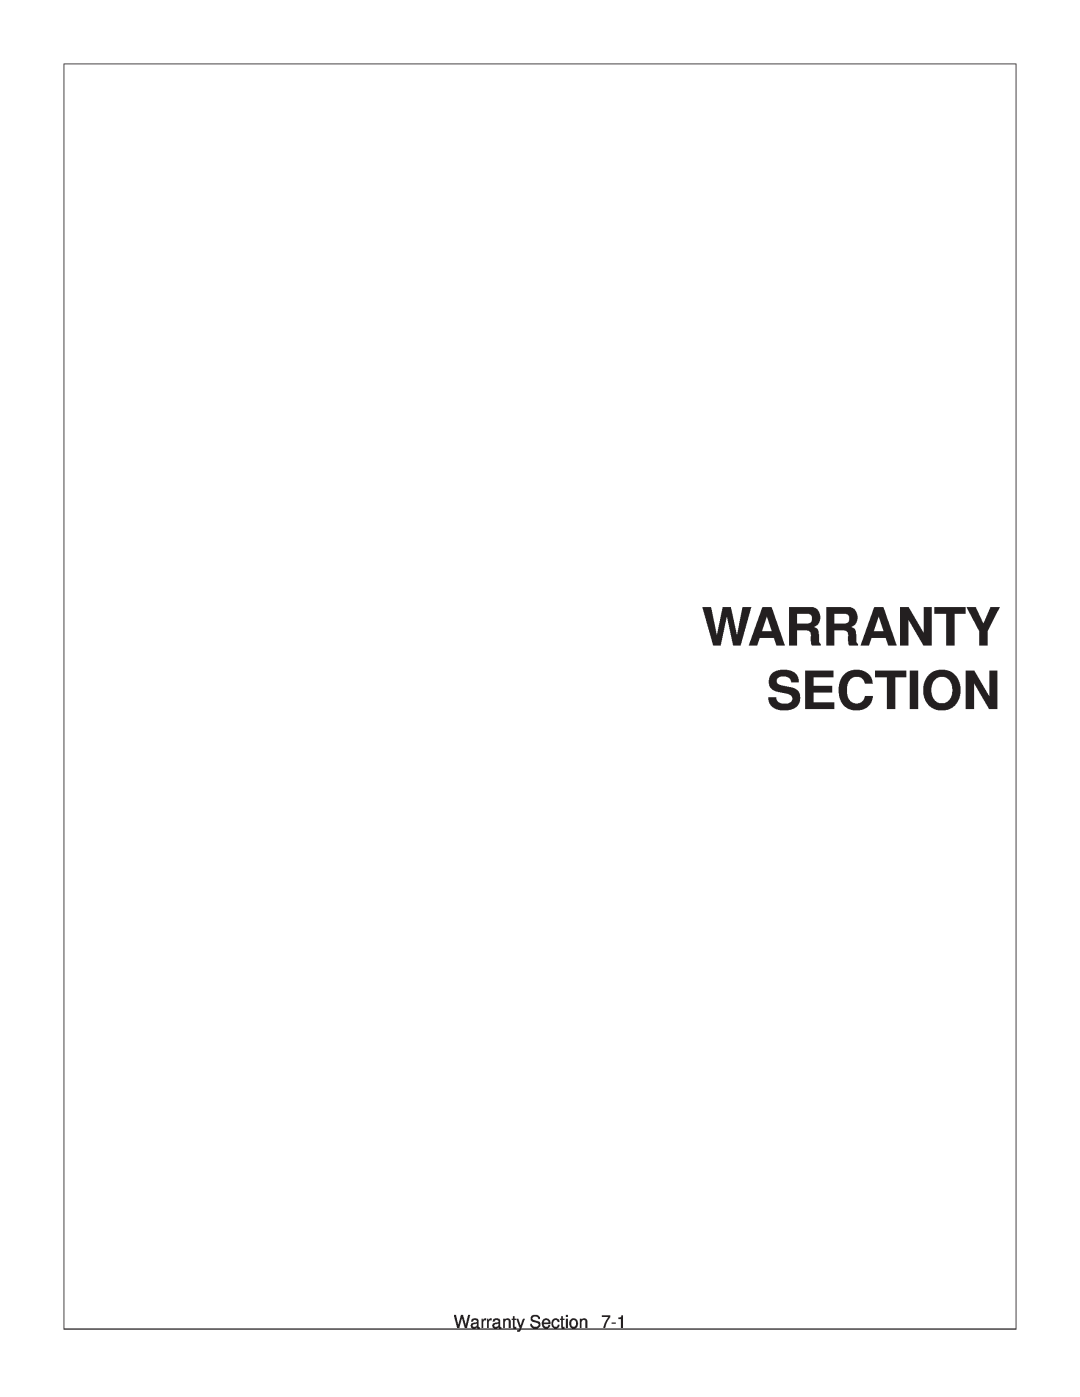 Tiger JD 5083E, JD 5101E, JD 5093E manual Warranty Section 